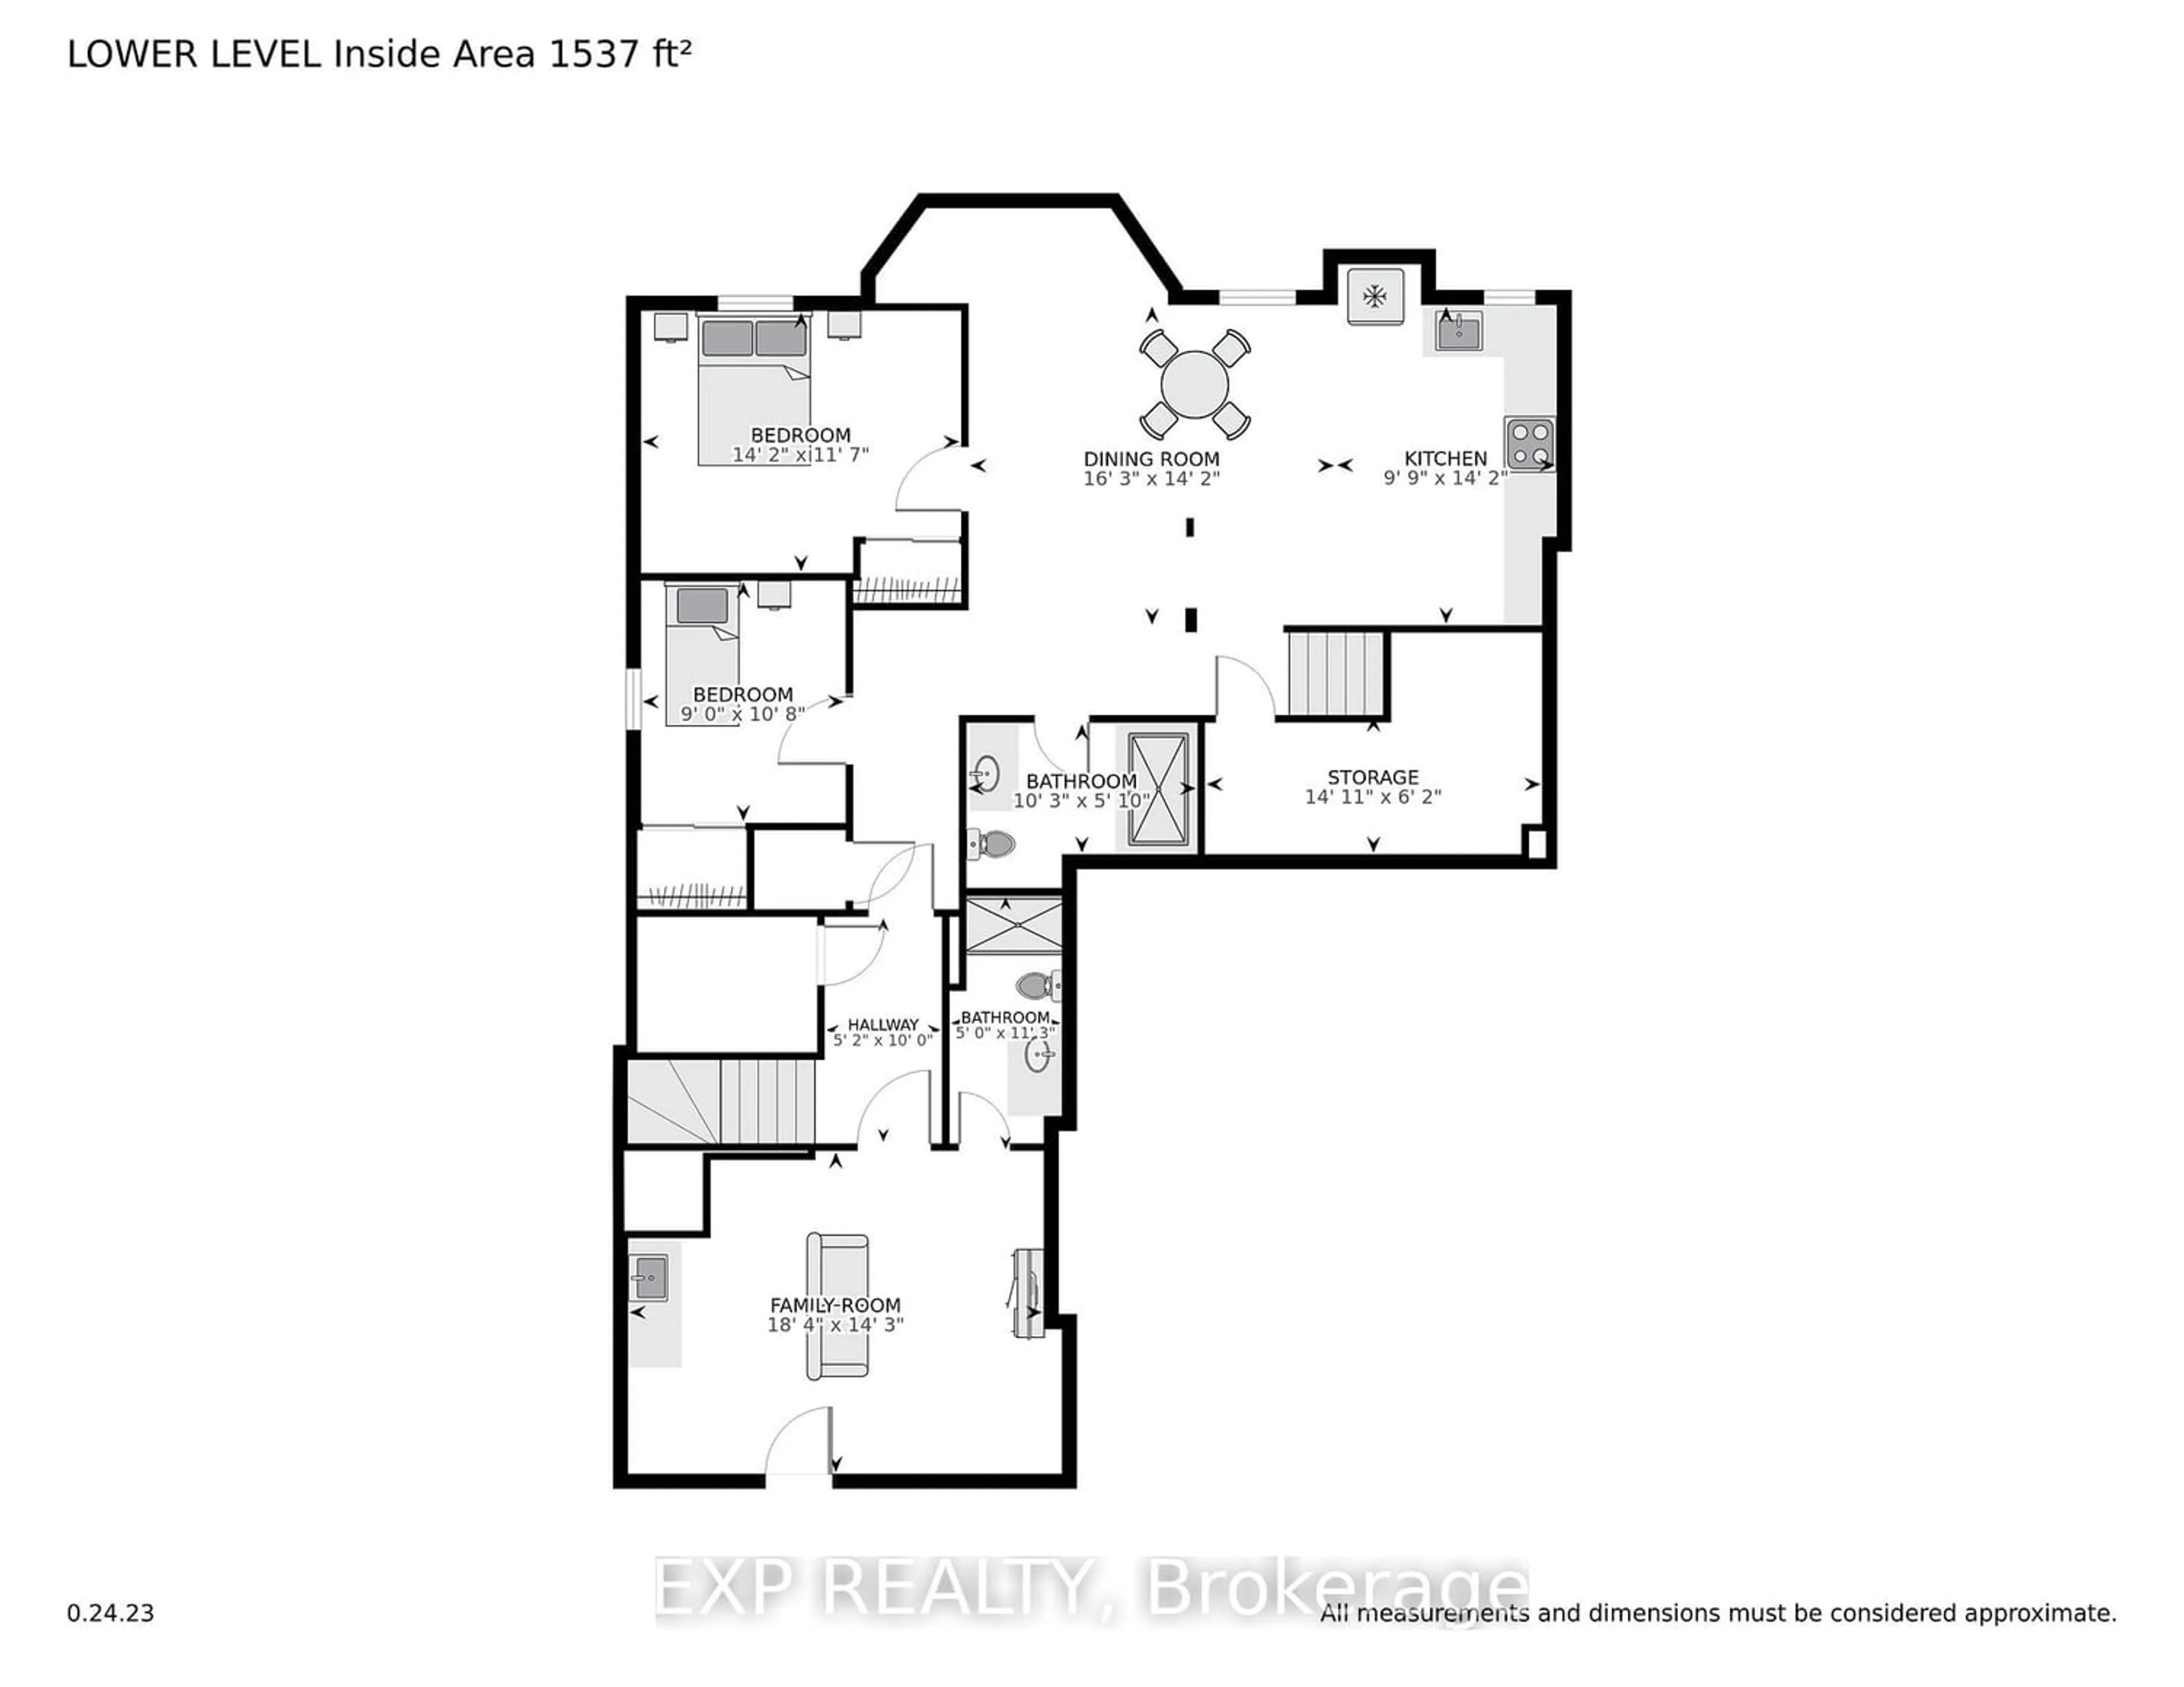 Floor plan for 14 Snowy Wood Dr, Brampton Ontario L7A 3E3